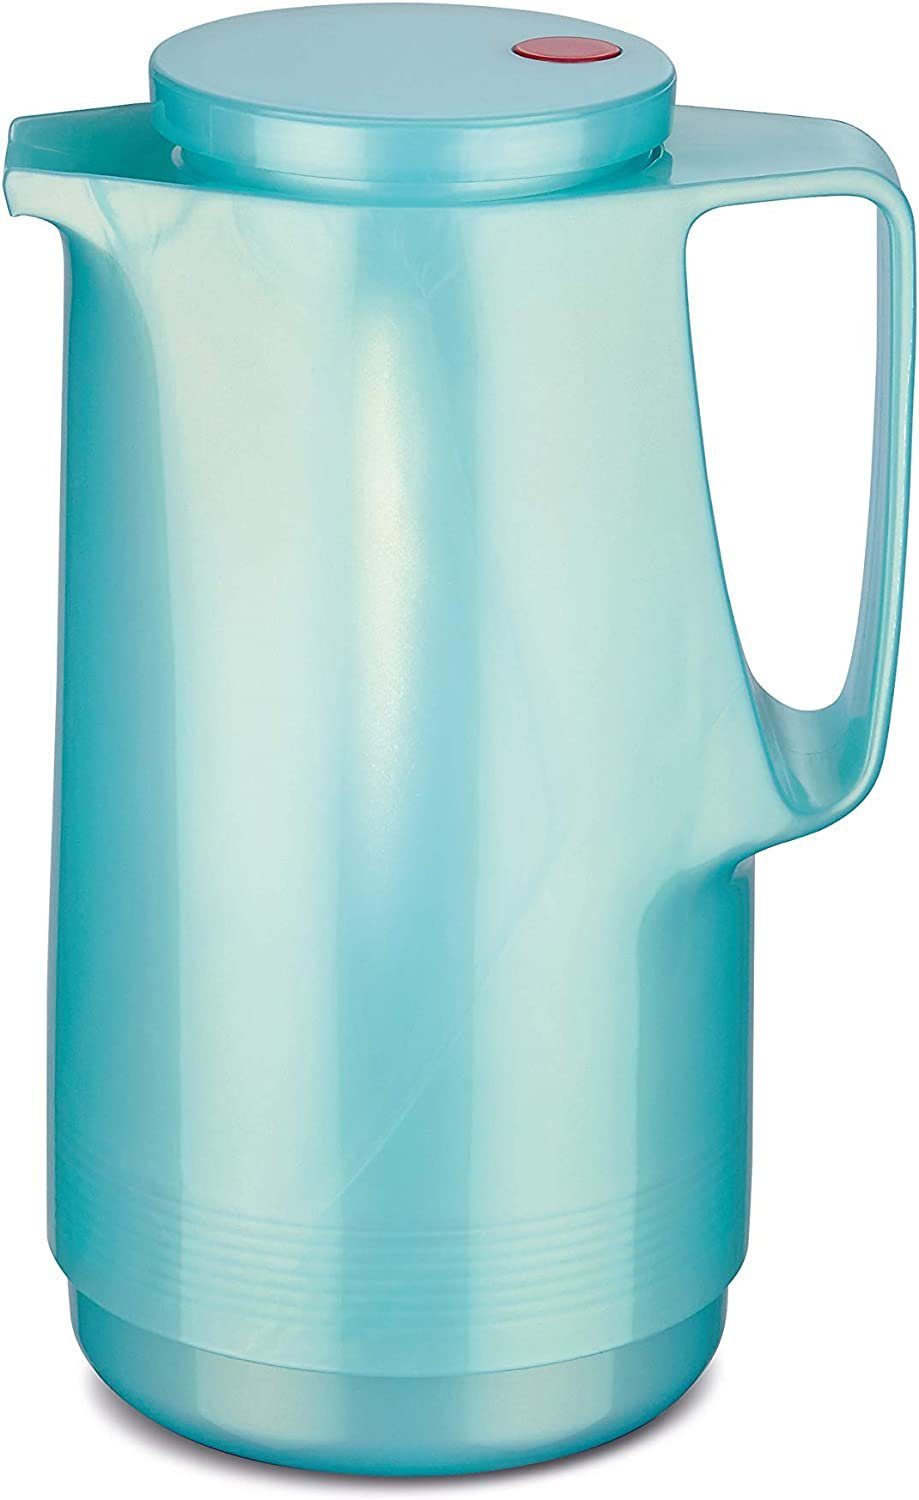 ROTPUNKT Isolierkanne 1,0 Liter Glaseinsatz I hochwertig I langlebig Ivoller Geschmack 760, 1 l, (shiny aquamarin), Glaskolben aus doppelwandigem Rosalin-Glas